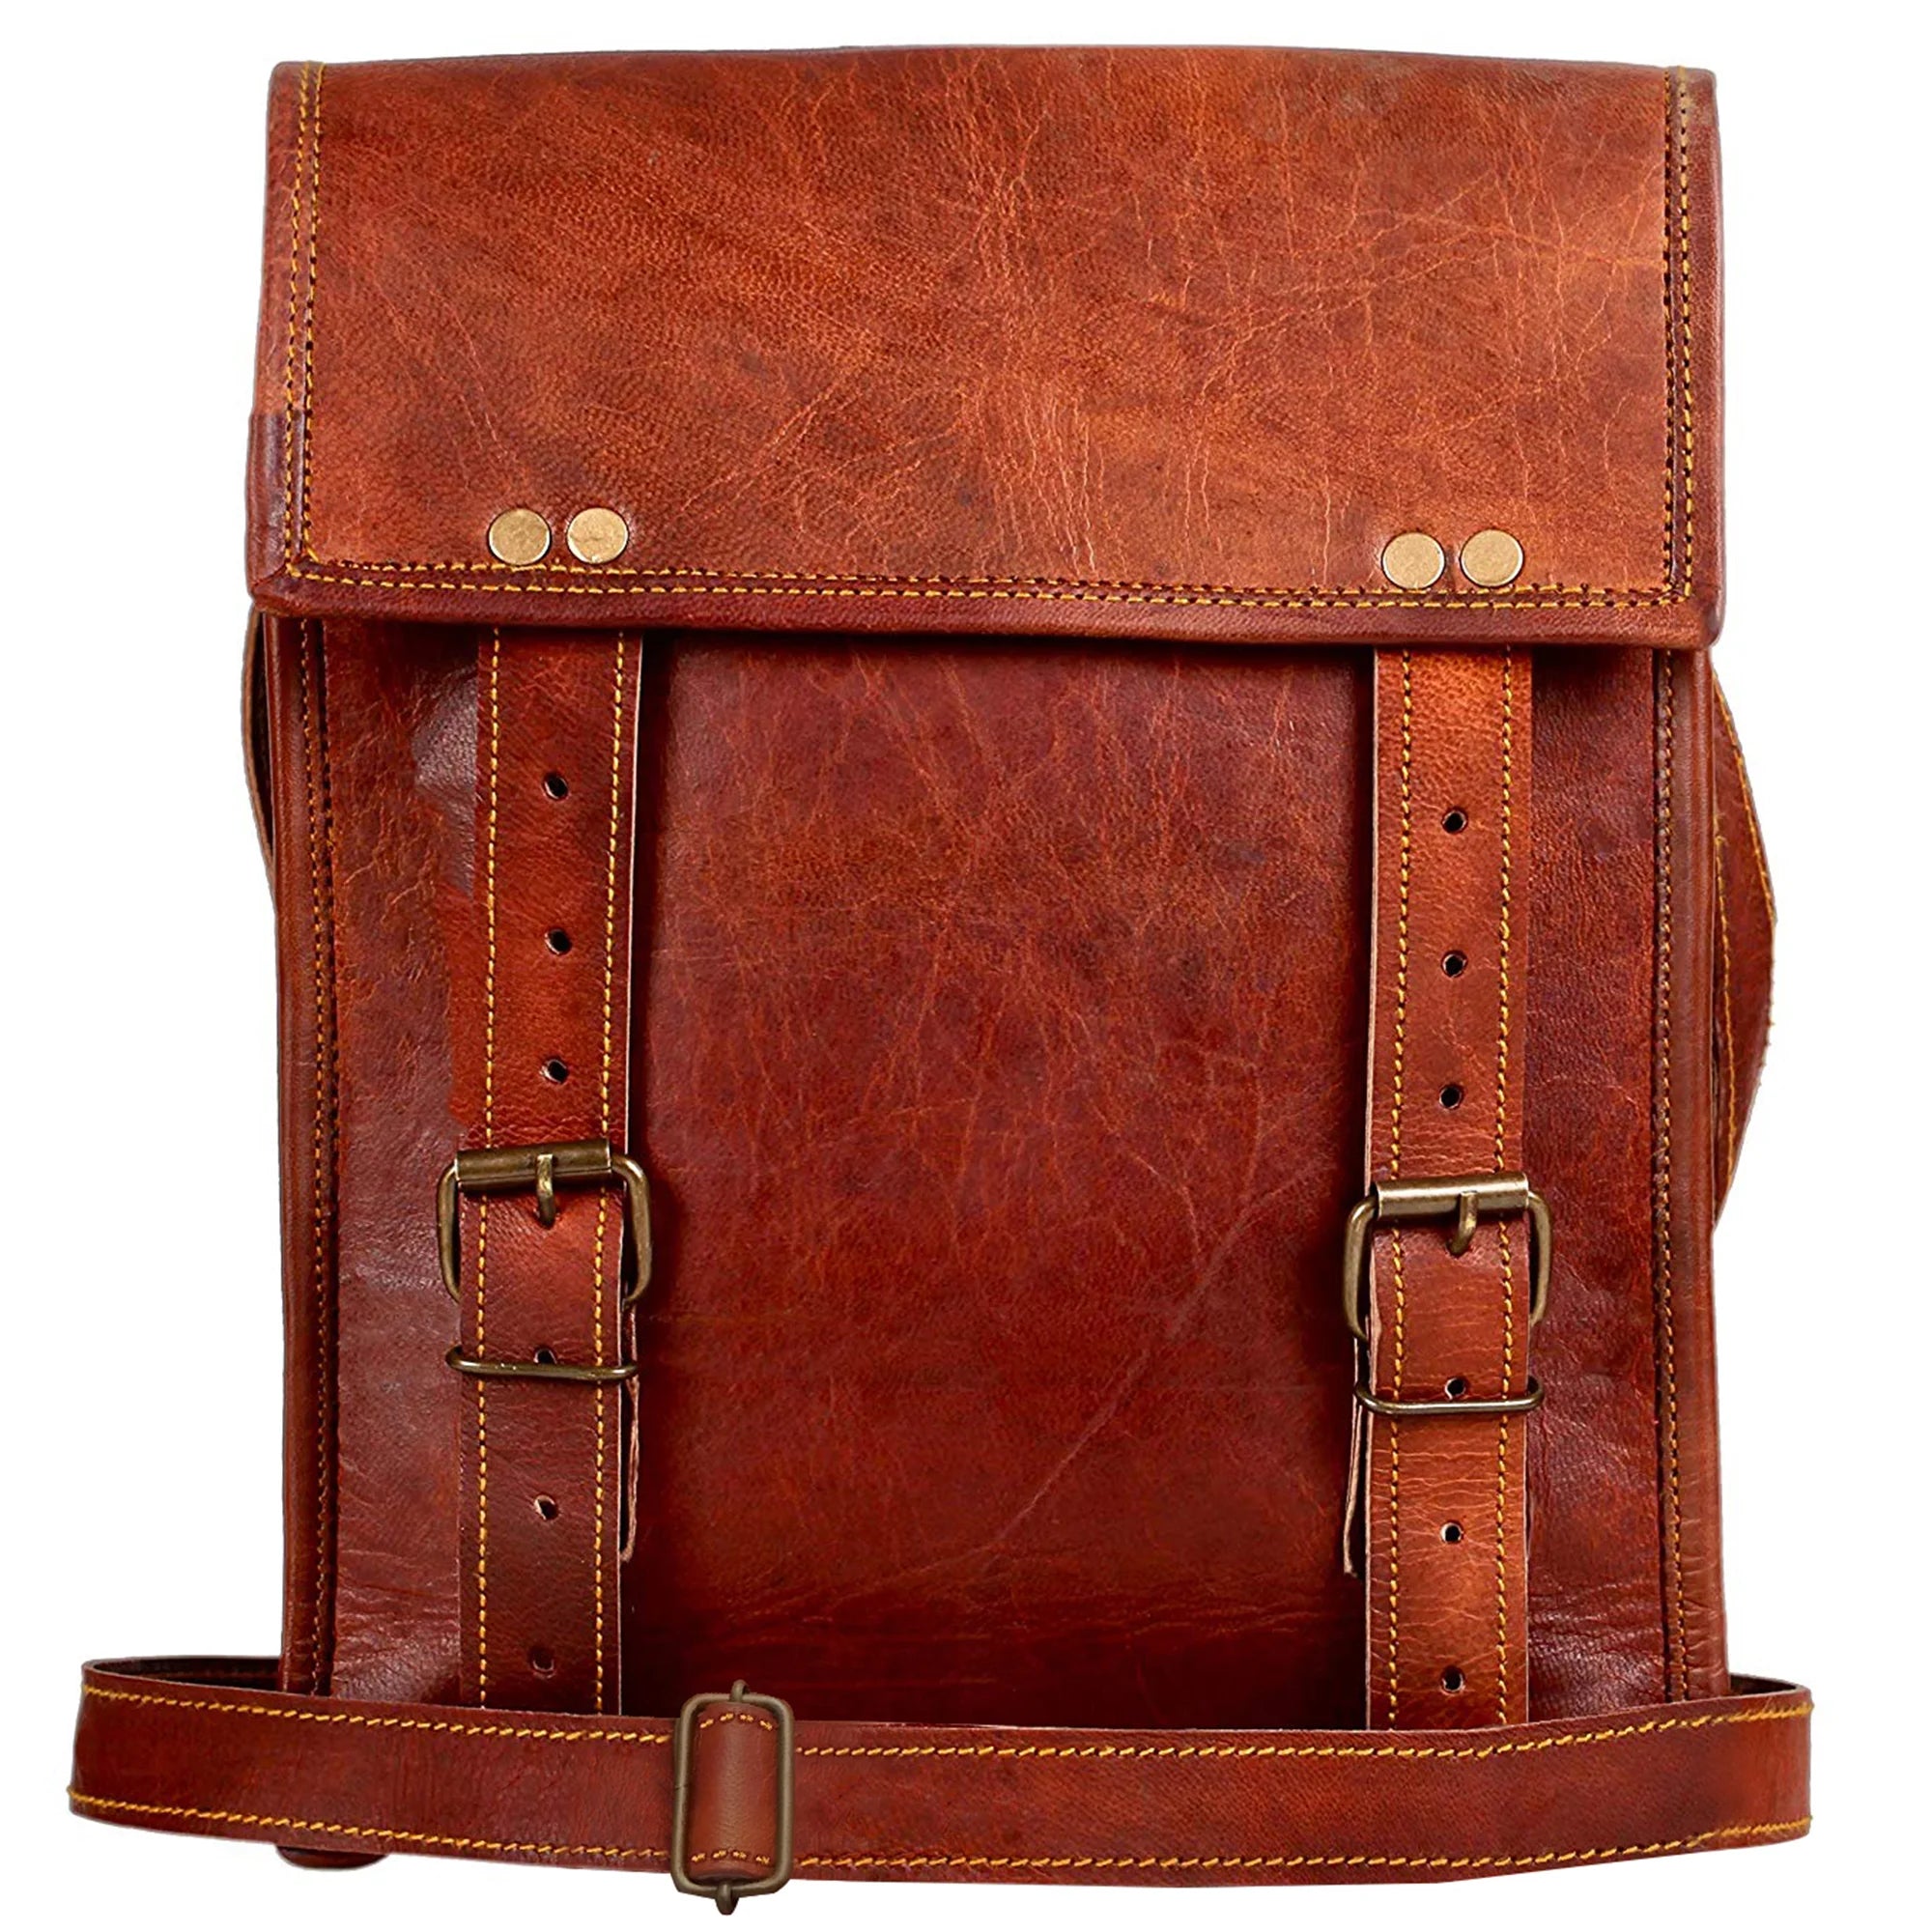 Artisian Leather Messenger Bag Cross-body Laptop Bag Satchel (14 inch) –  Rustic Town